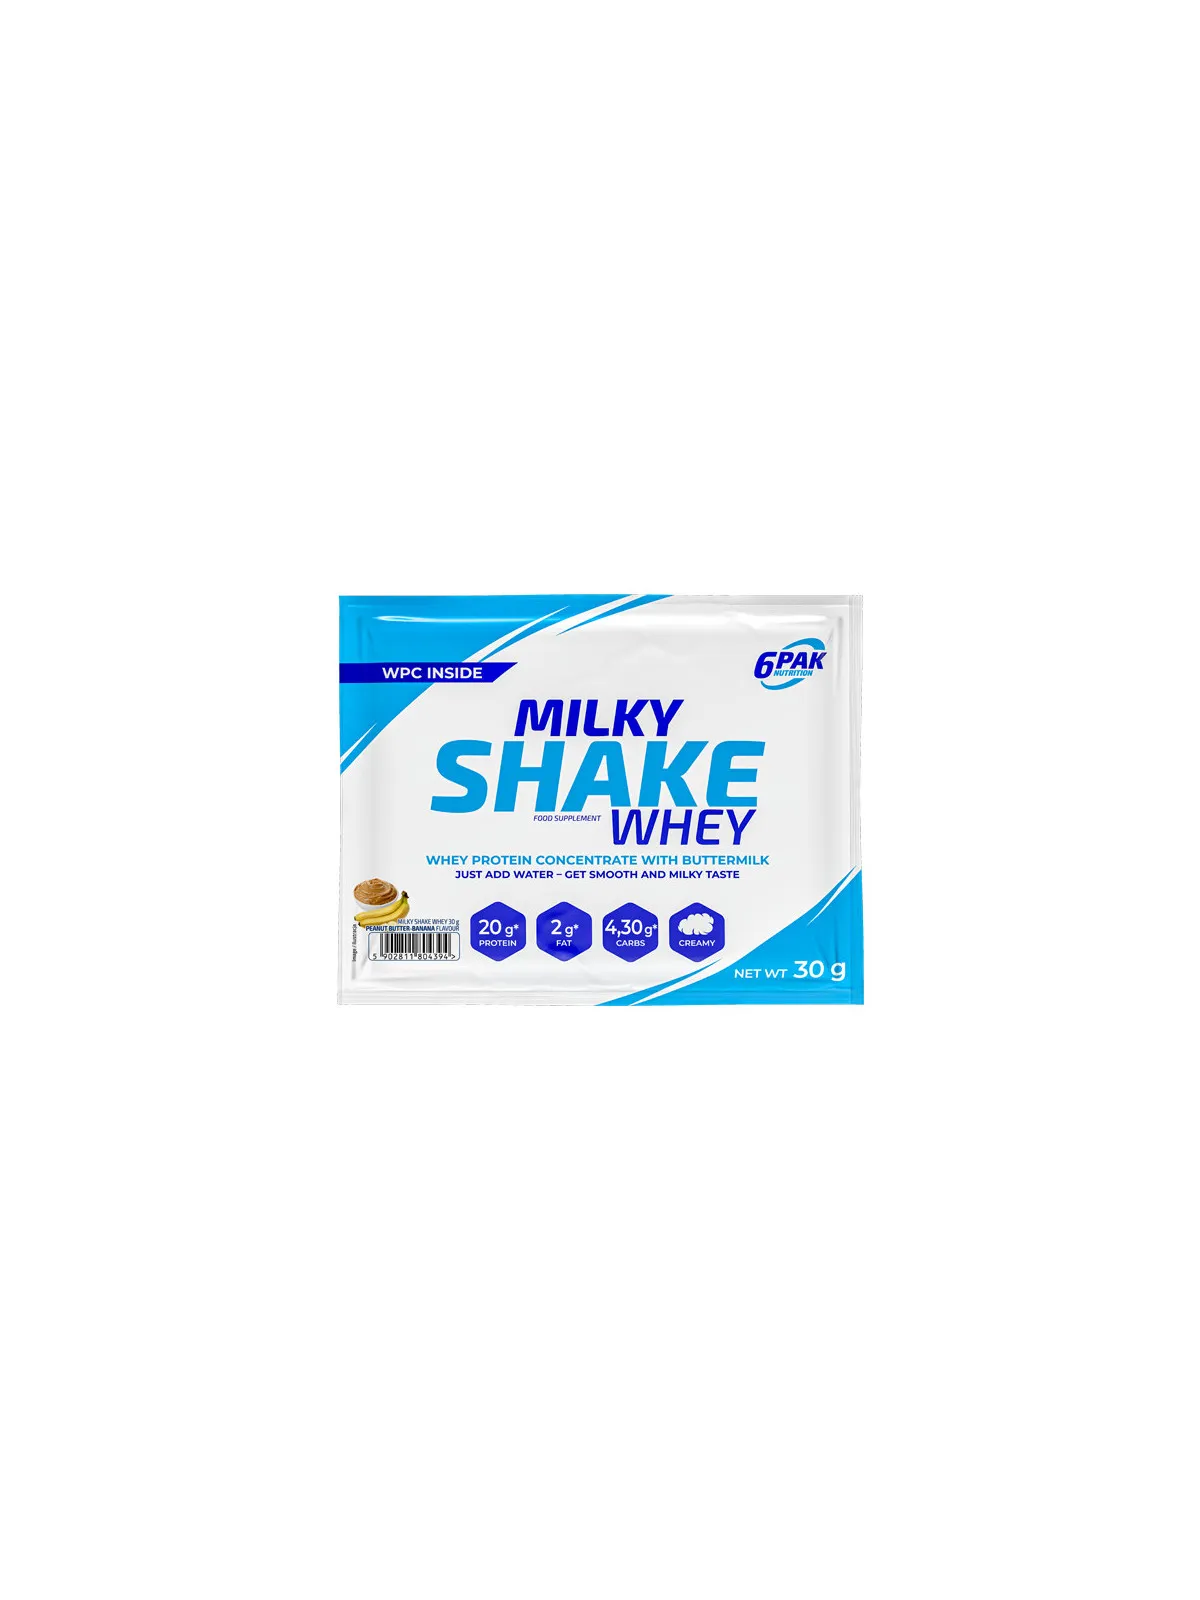 Milky Shake Whey - 30g SAMPLE